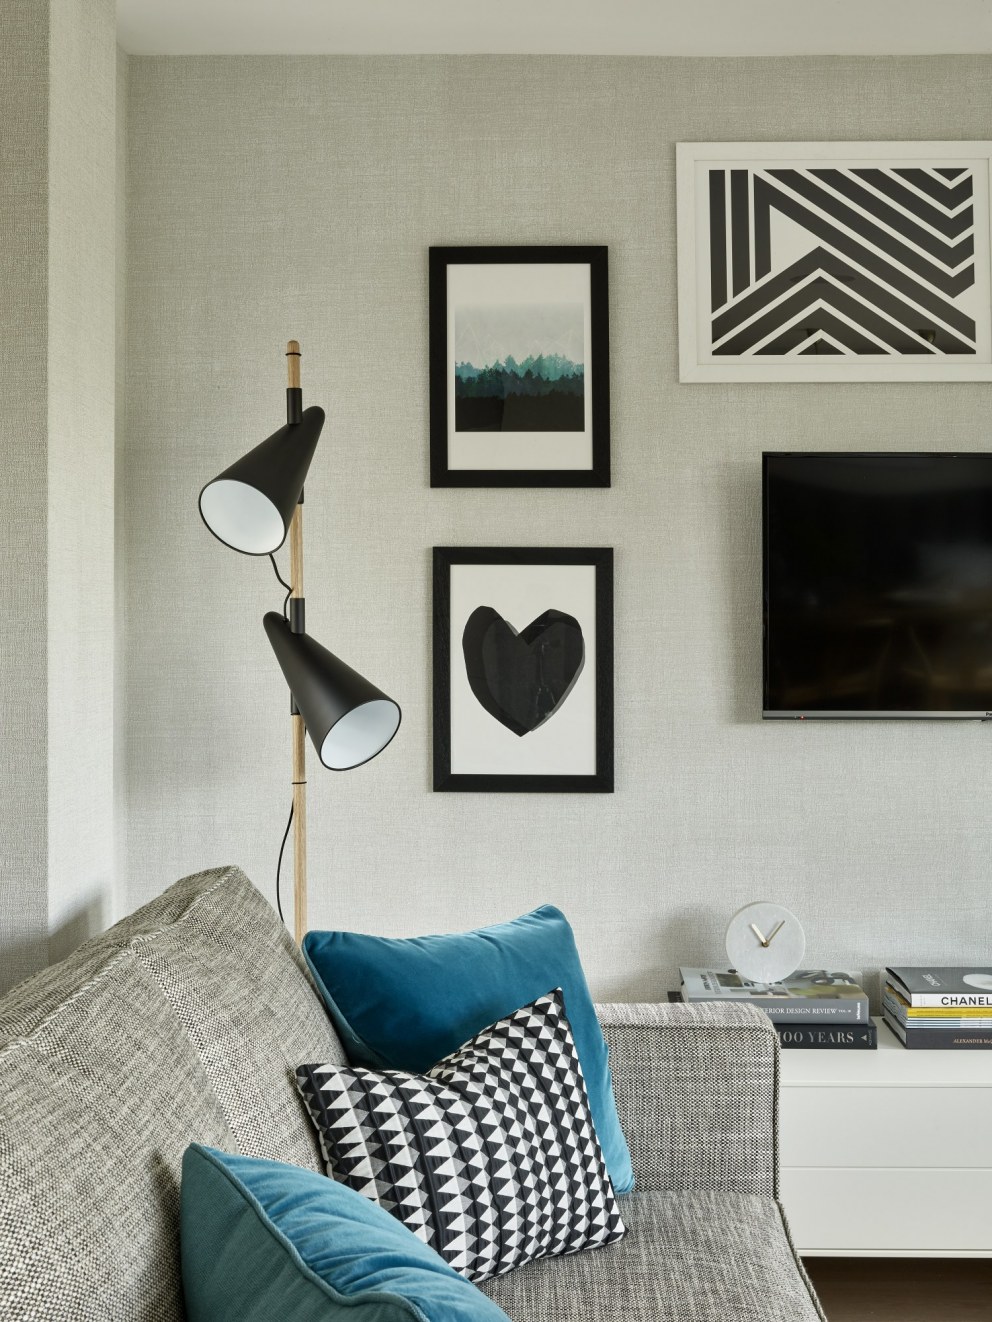 West London Riverside Home  | Living room area | Interior Designers